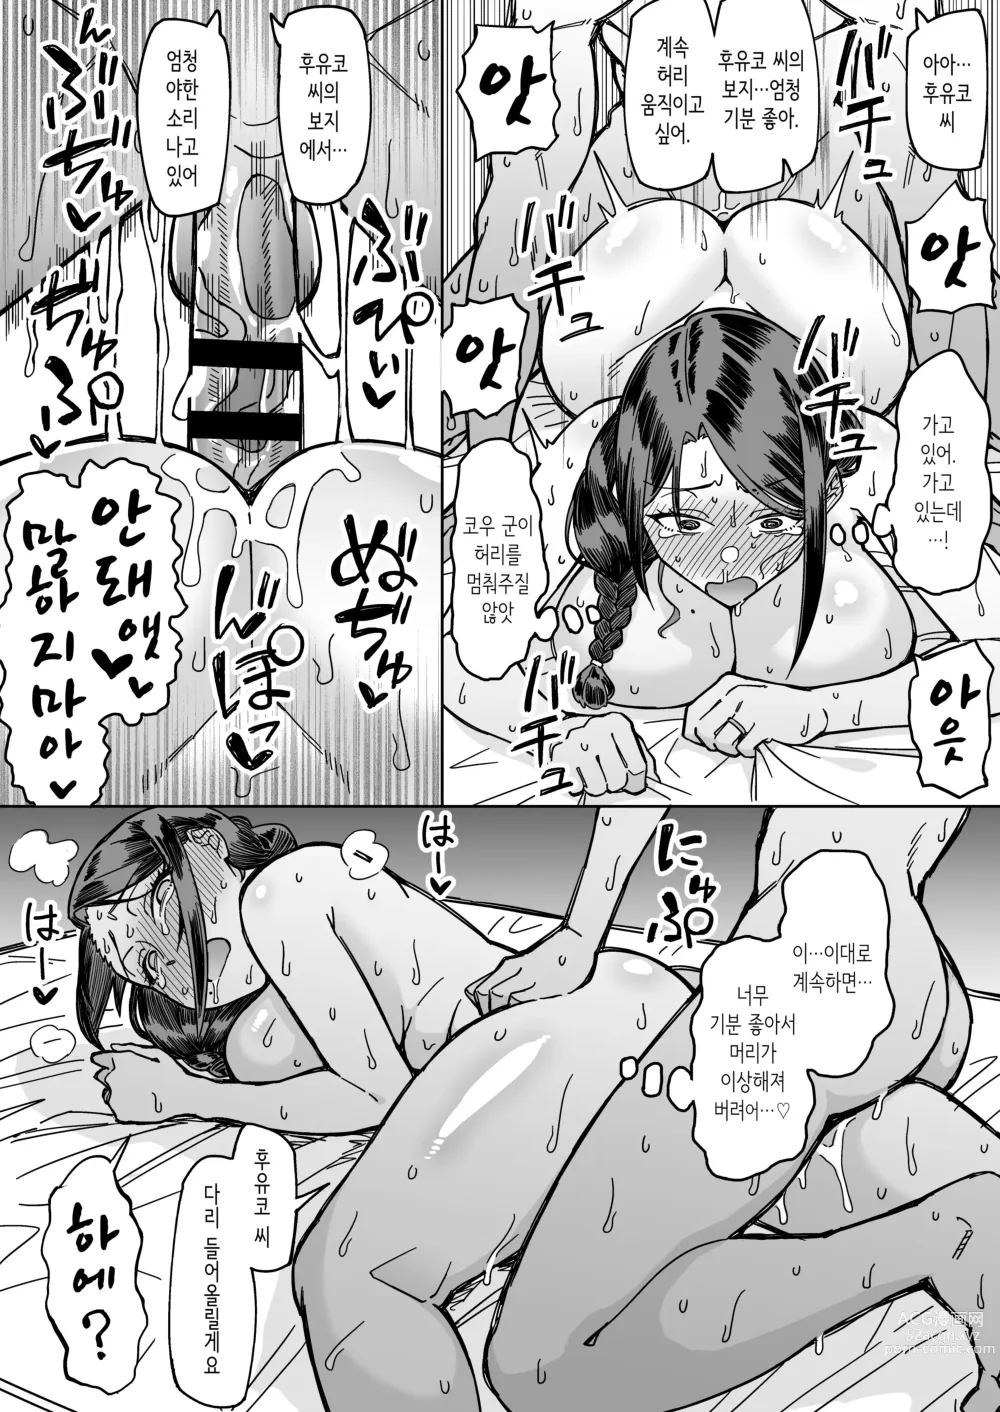 Page 55 of doujinshi 첫사랑은, 친구 엄마.